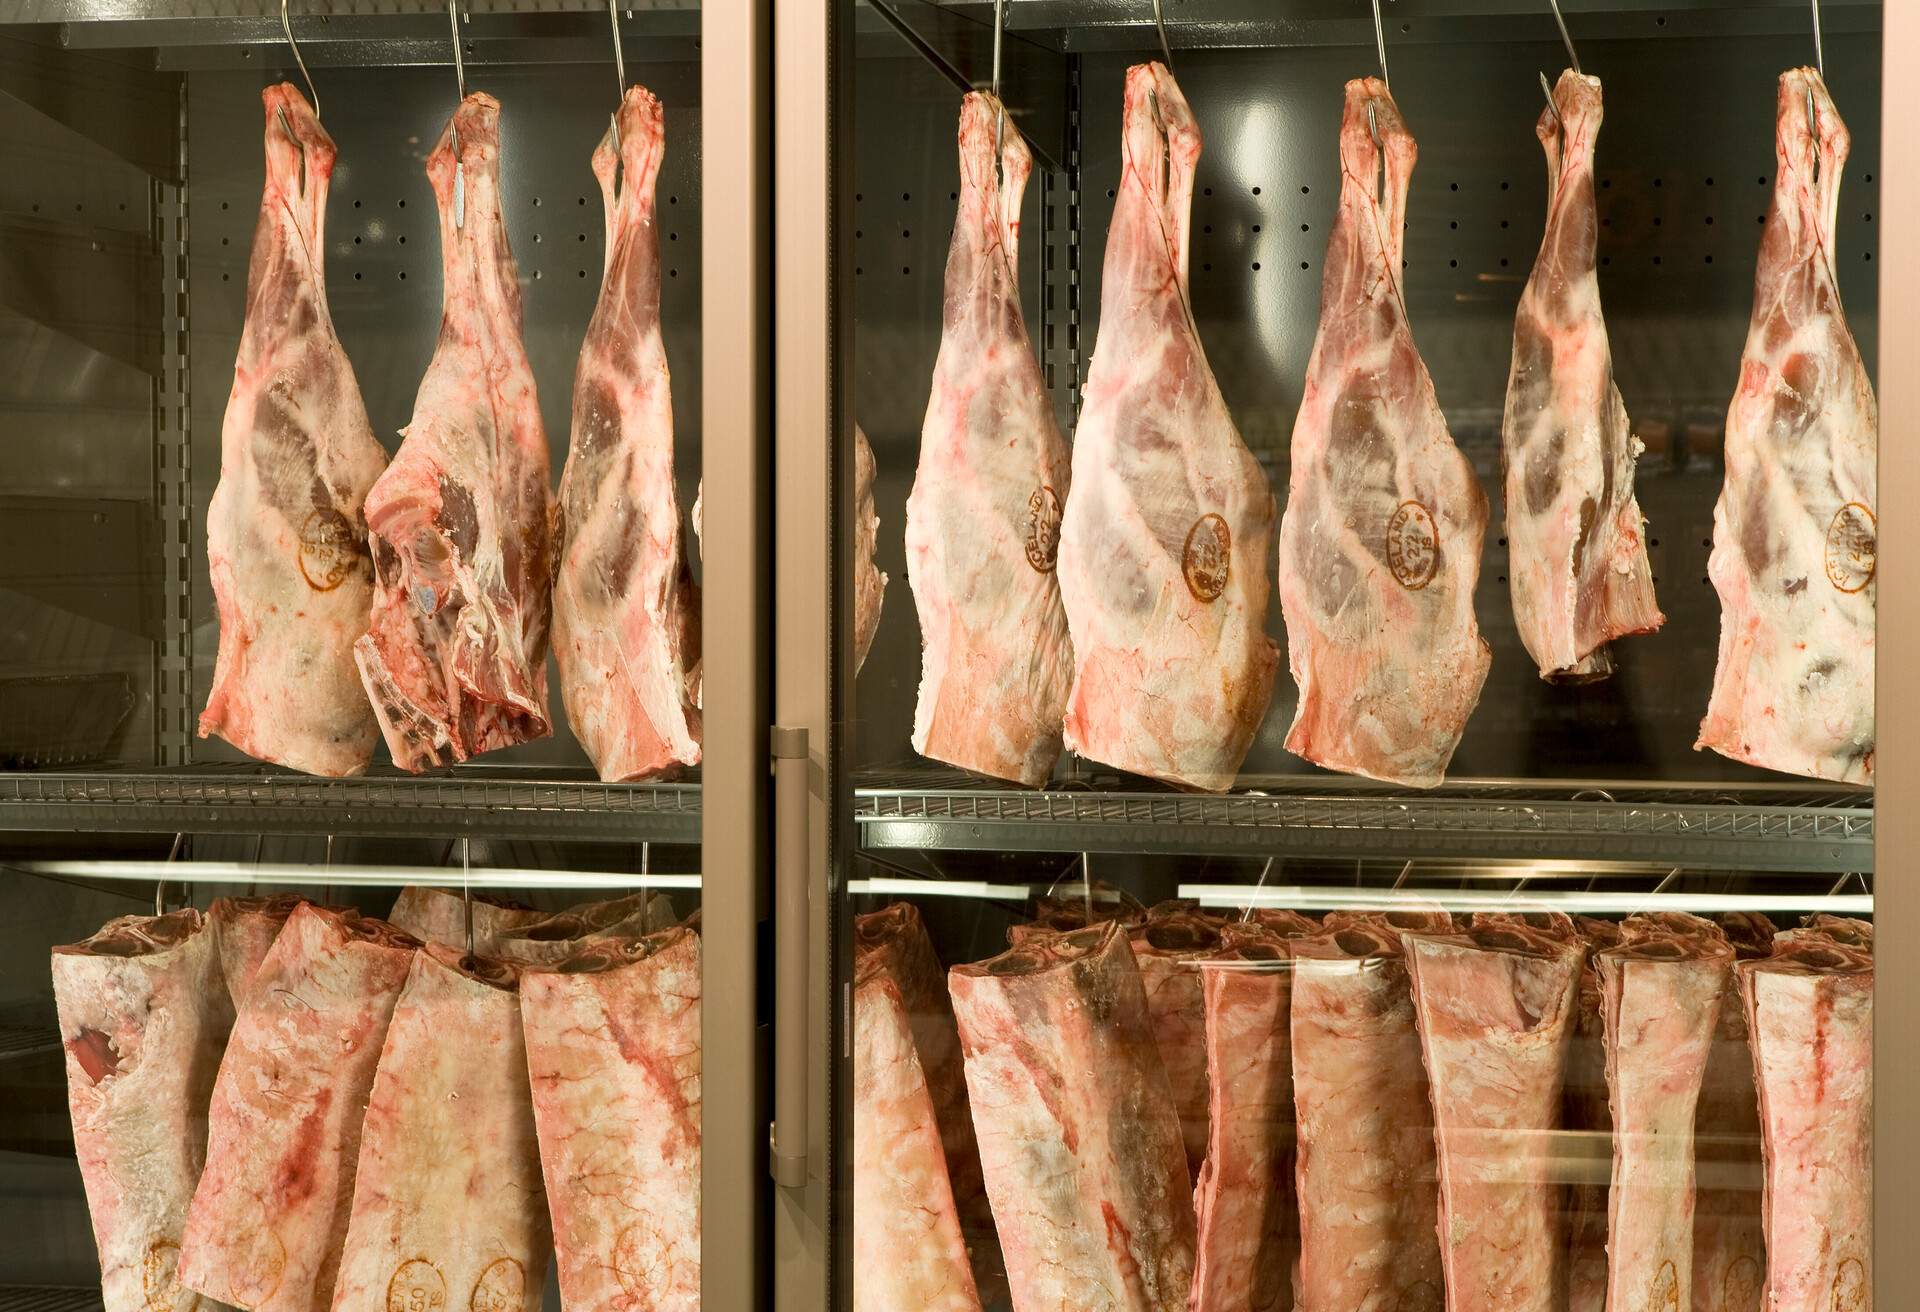 New slaughtered lamb meat for sale in shop, Reykjavik, Iceland